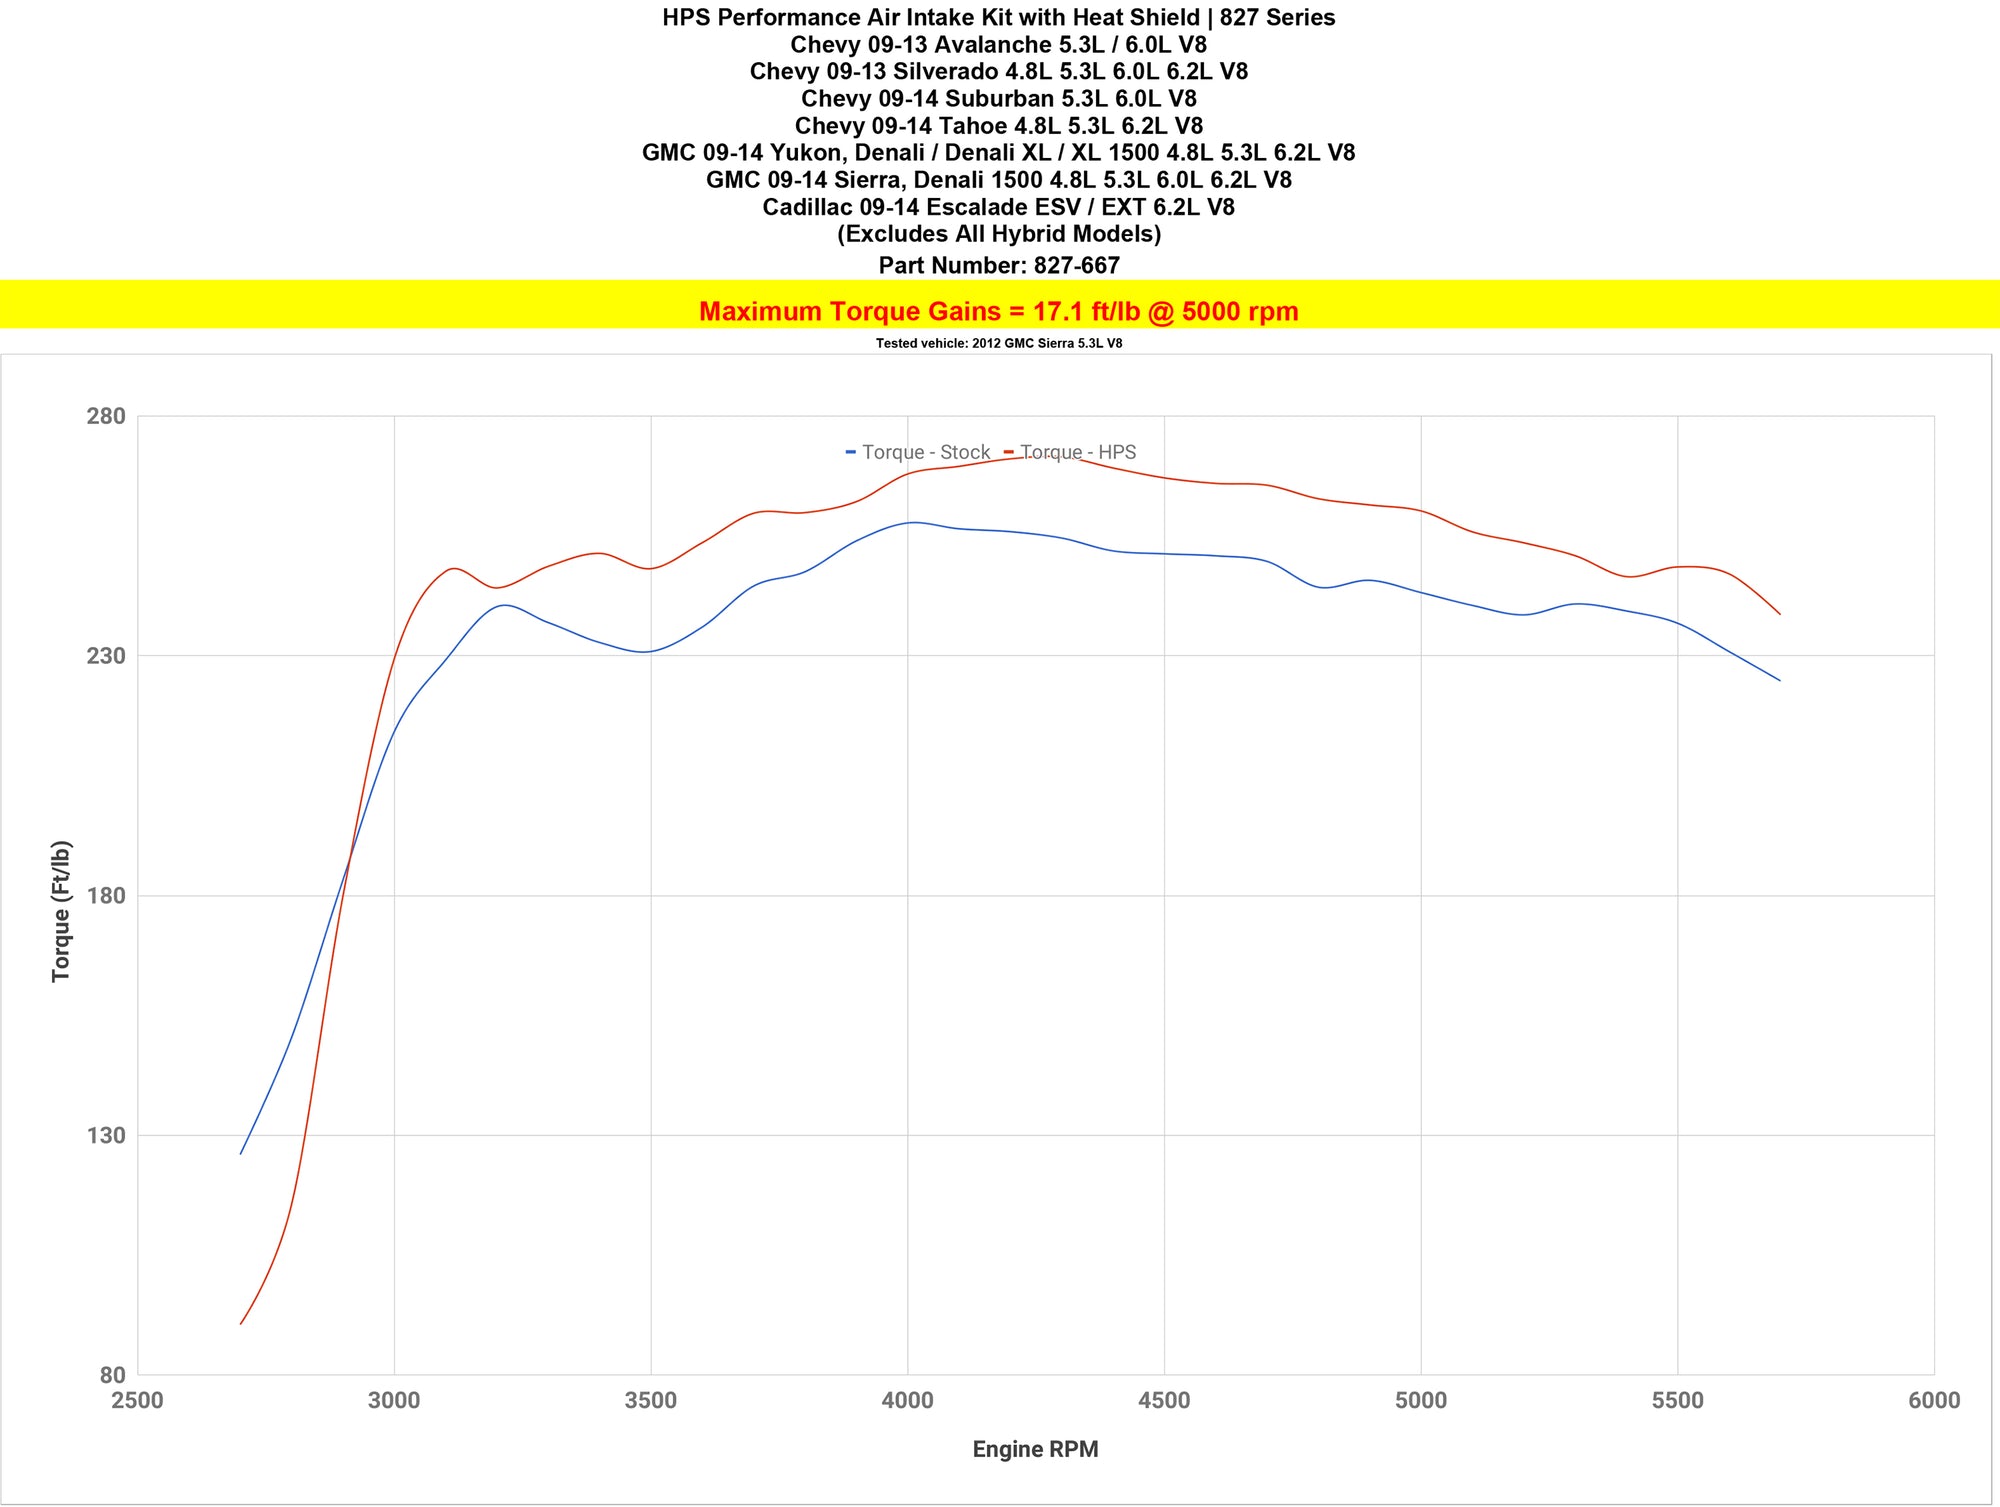 Dyno proven increase torque 17.1 ft/lb HPS Shortram Cold Air Intake Kit 2009-2013 GMC Sierra 1500 4.8L 5.3L 6.0L 6.2L V8 (Excludes Hybrid) 827-667